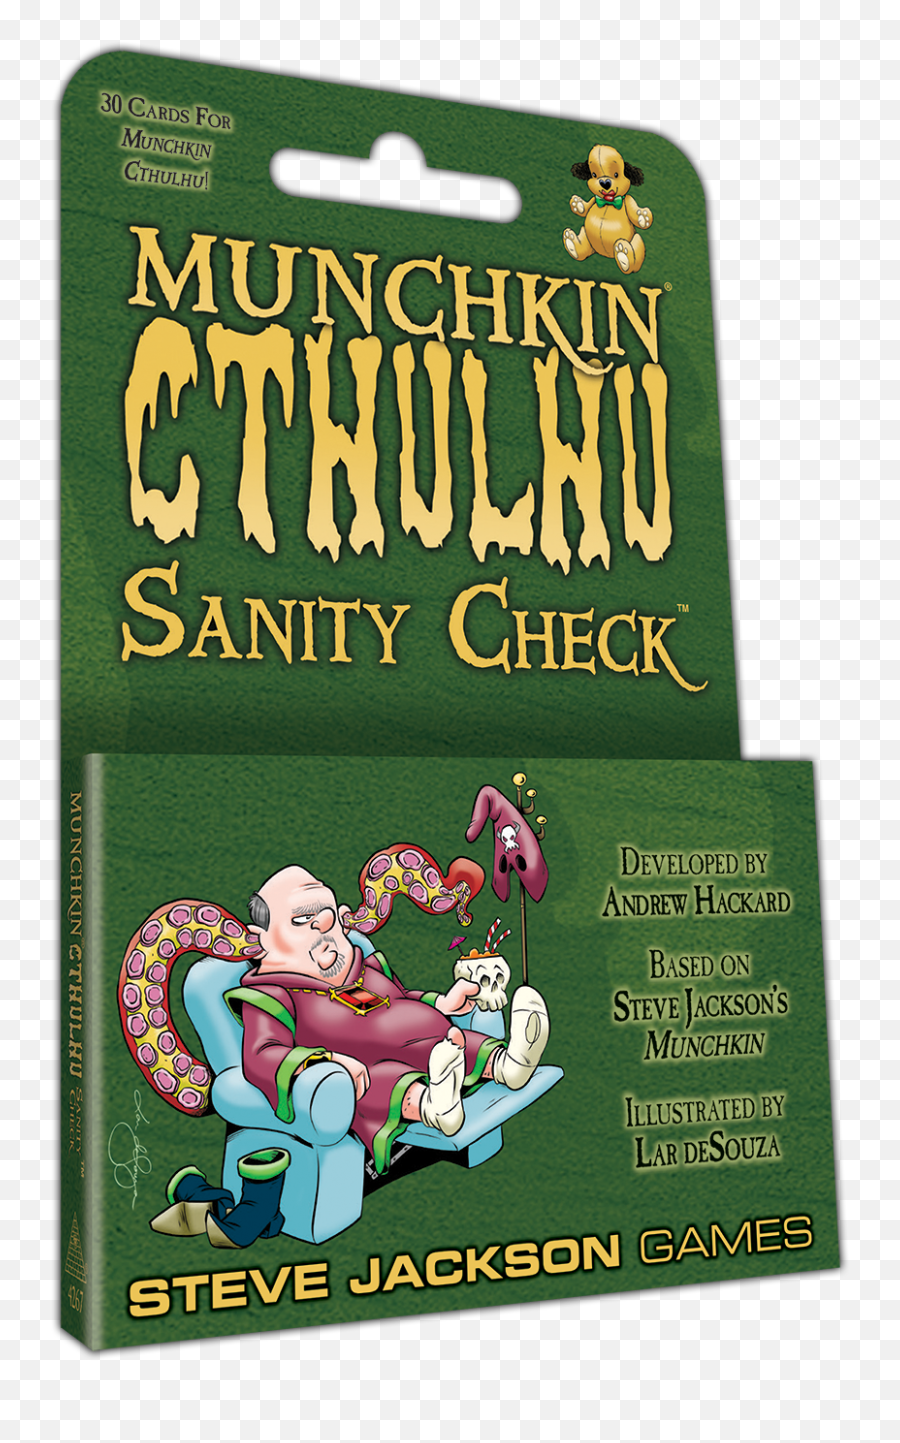 Munchkin Cthulhu Sanity Check Png Transparent